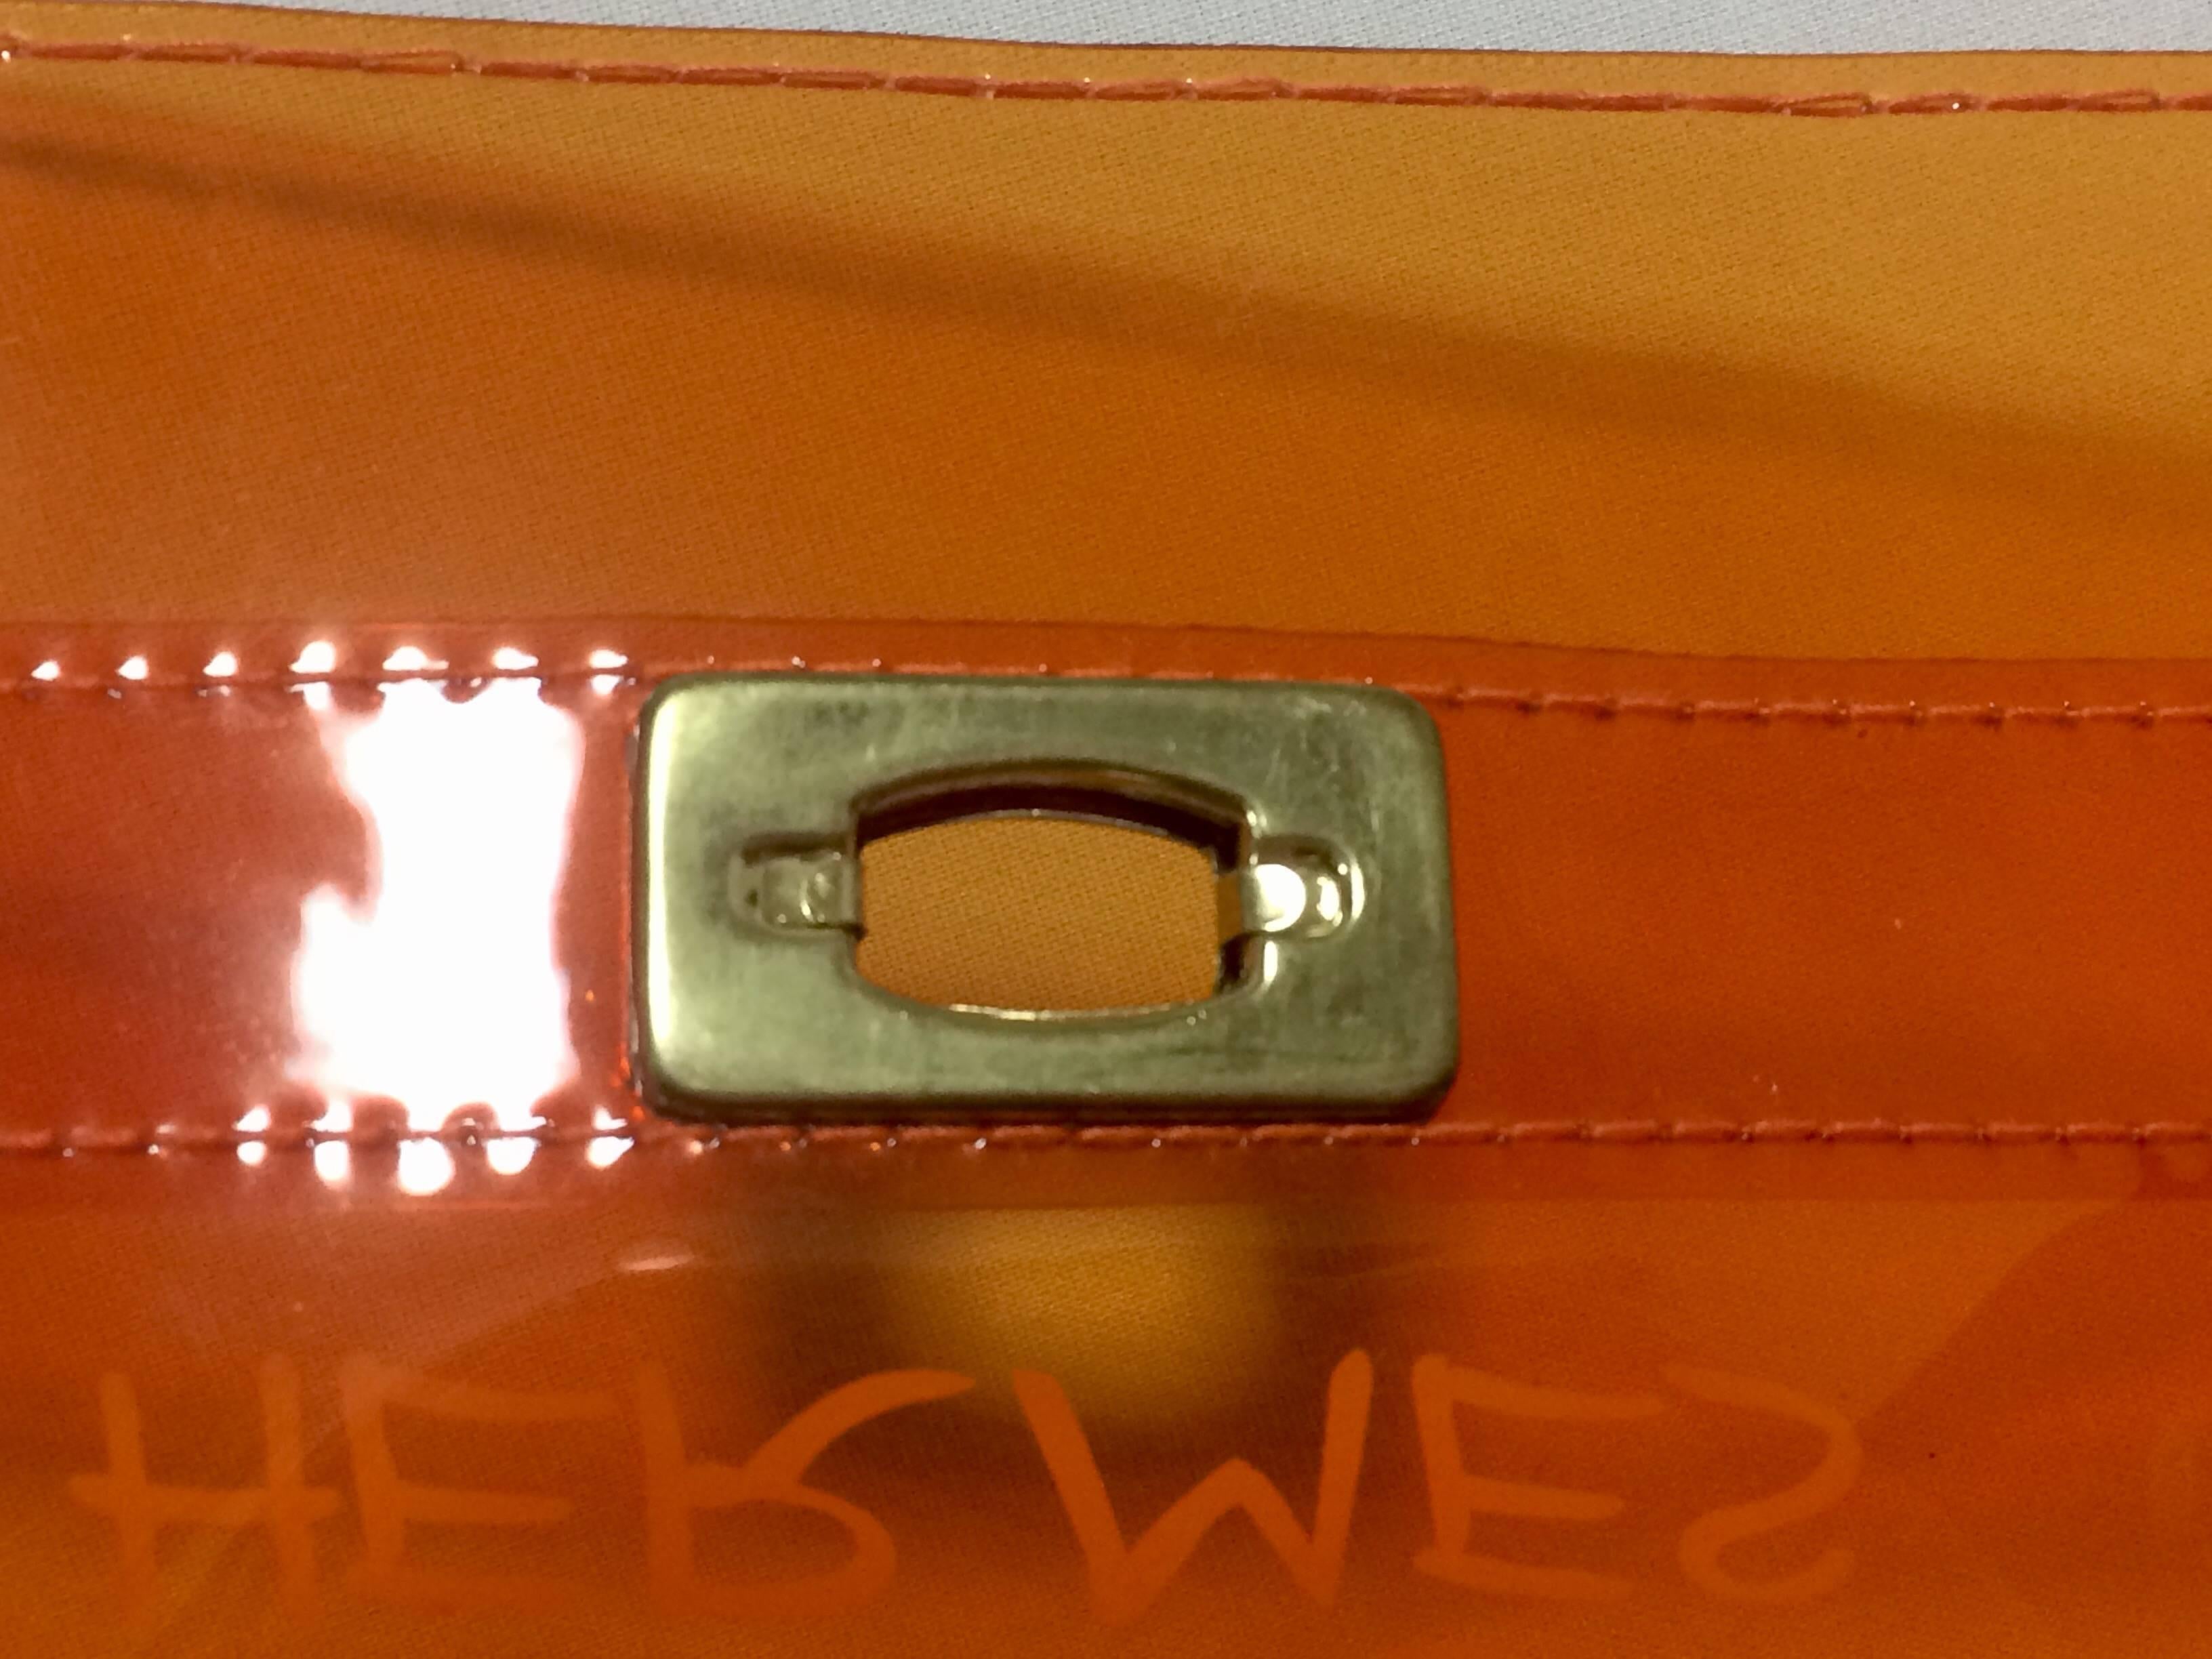 MINT condition. Hermes a rare transparent Vintage orange vinyl Kelly bag. Rare 2